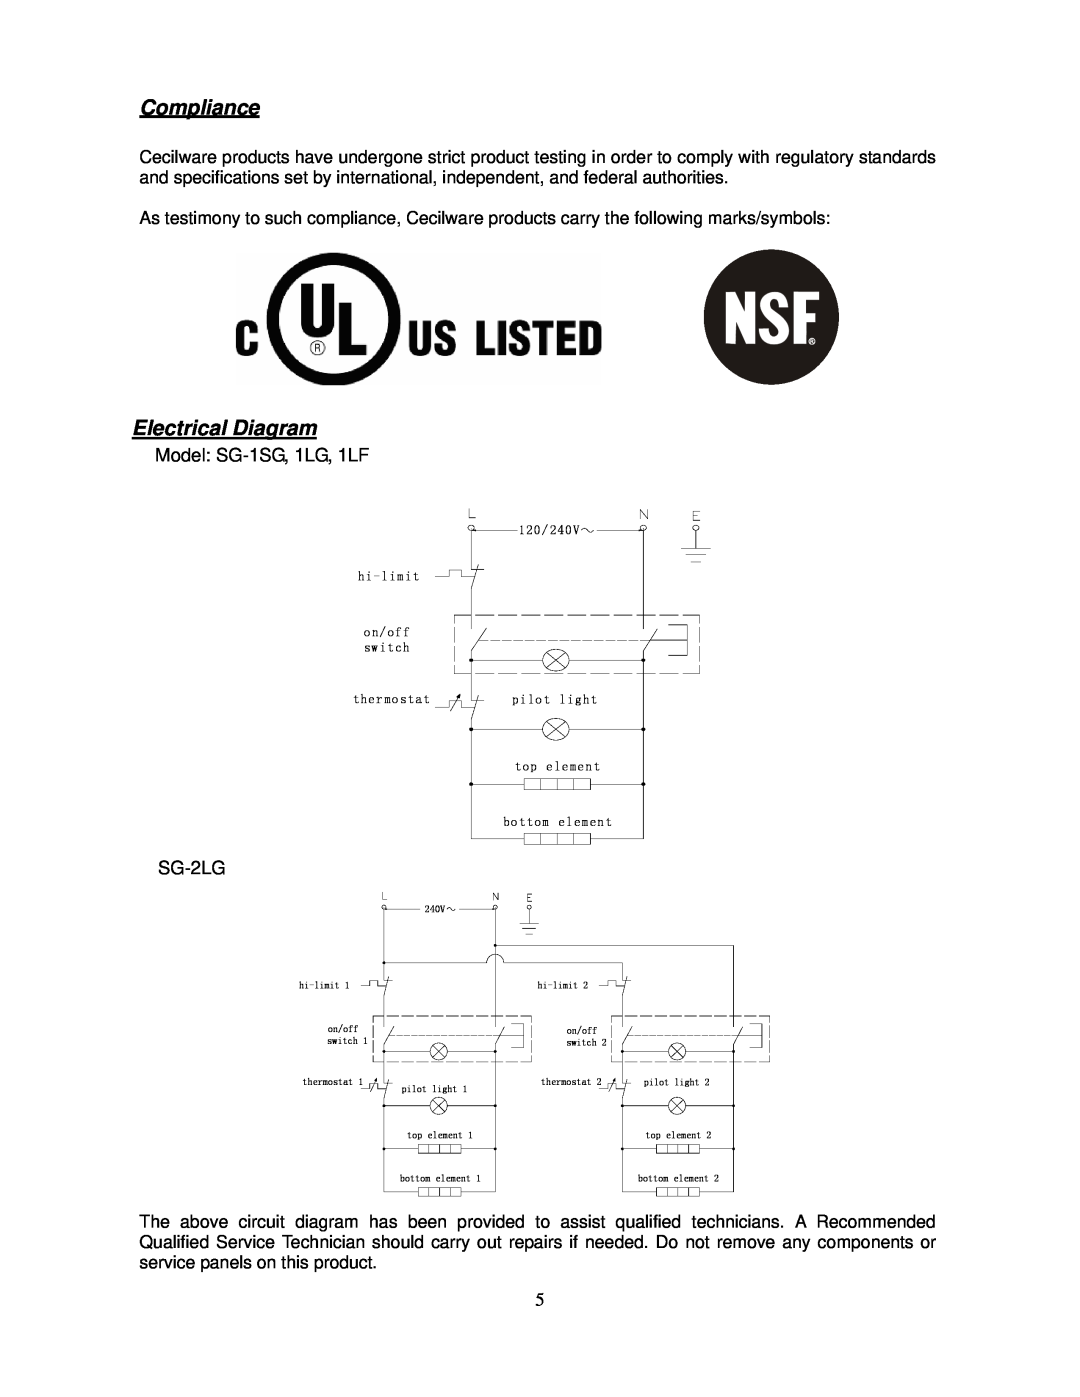 Cecilware operation manual Compliance, Electrical Diagram, Model SG-1SG, 1LG, 1LF, SG-2LG 